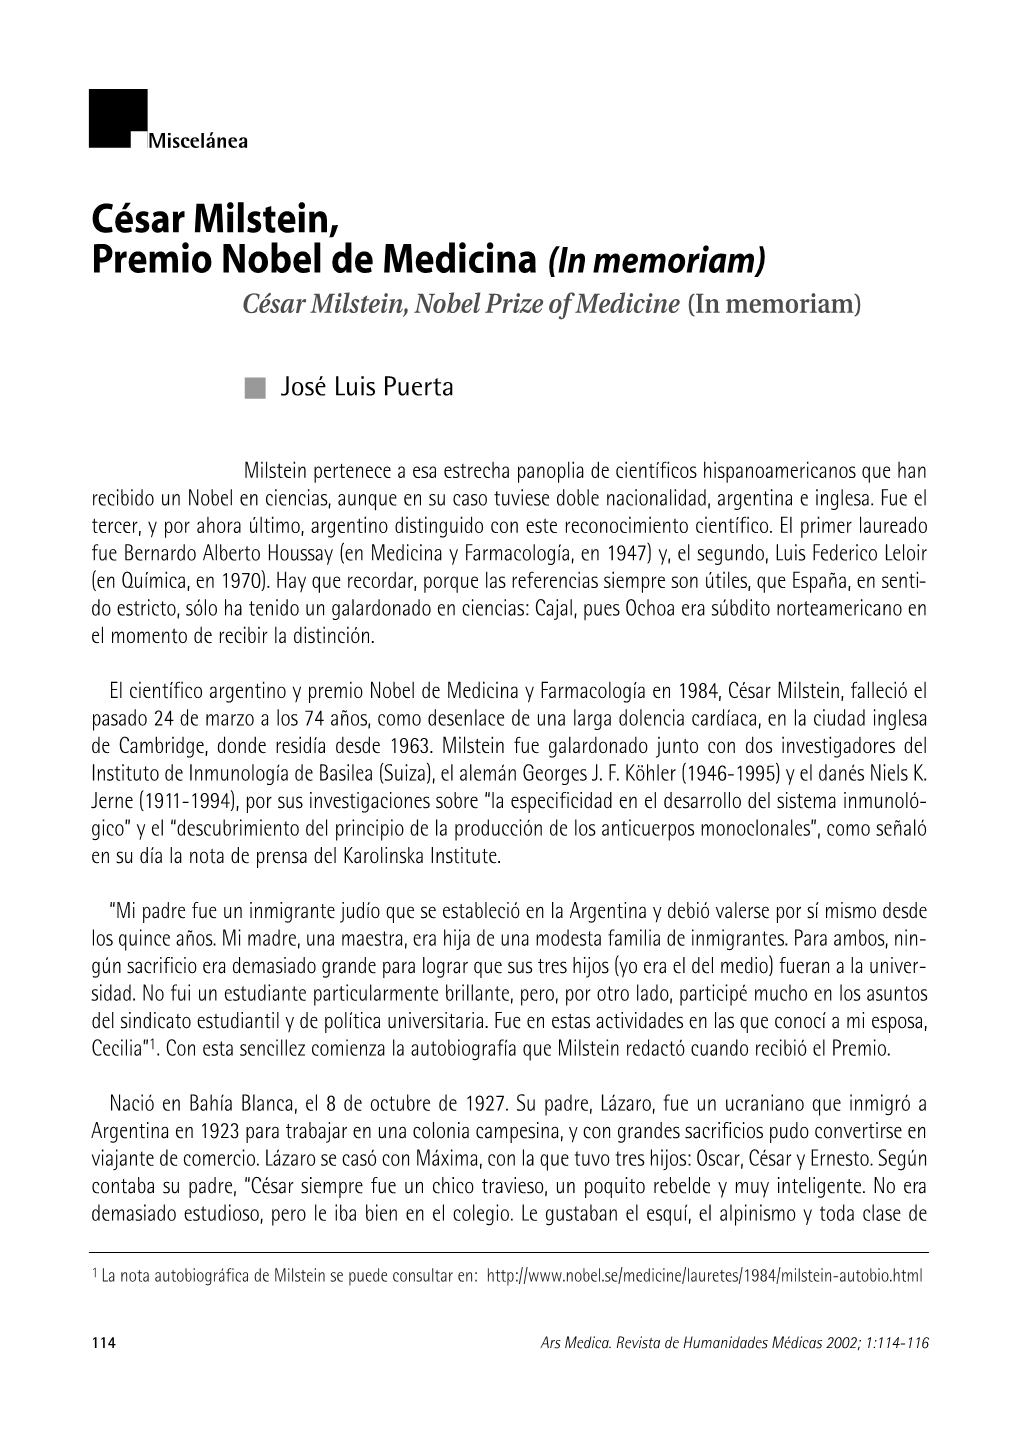 César Milstein, Premio Nobel De Medicina (In Memoriam) César Milstein, Nobel Prize of Medicine (In Memoriam)